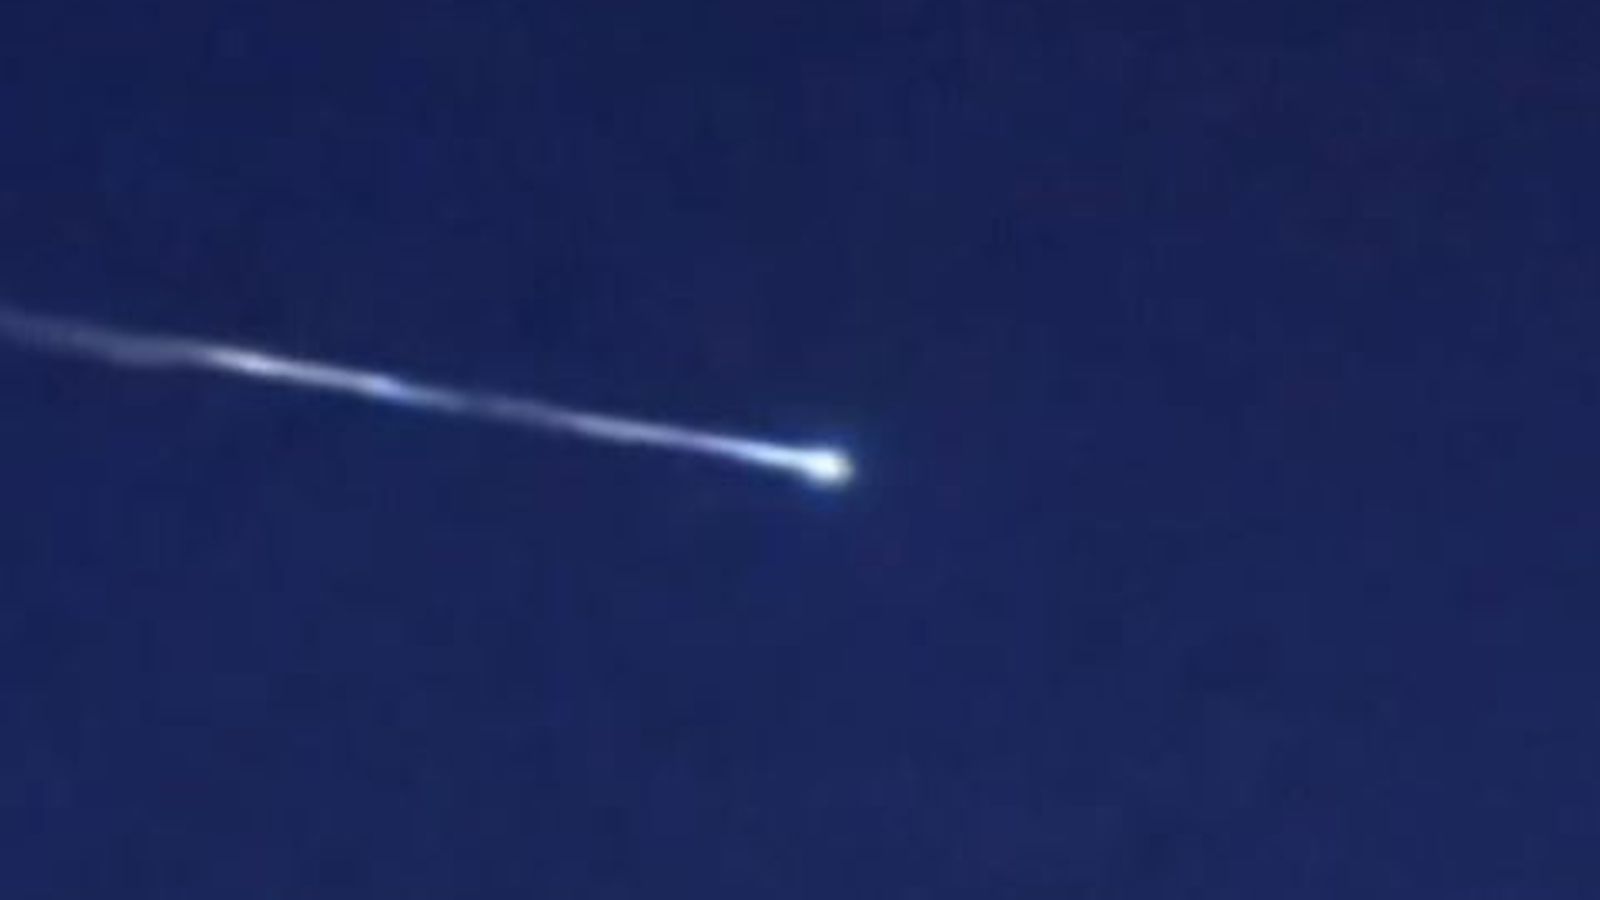 'Meteor' seen streaking across night sky in Michigan US News Sky News